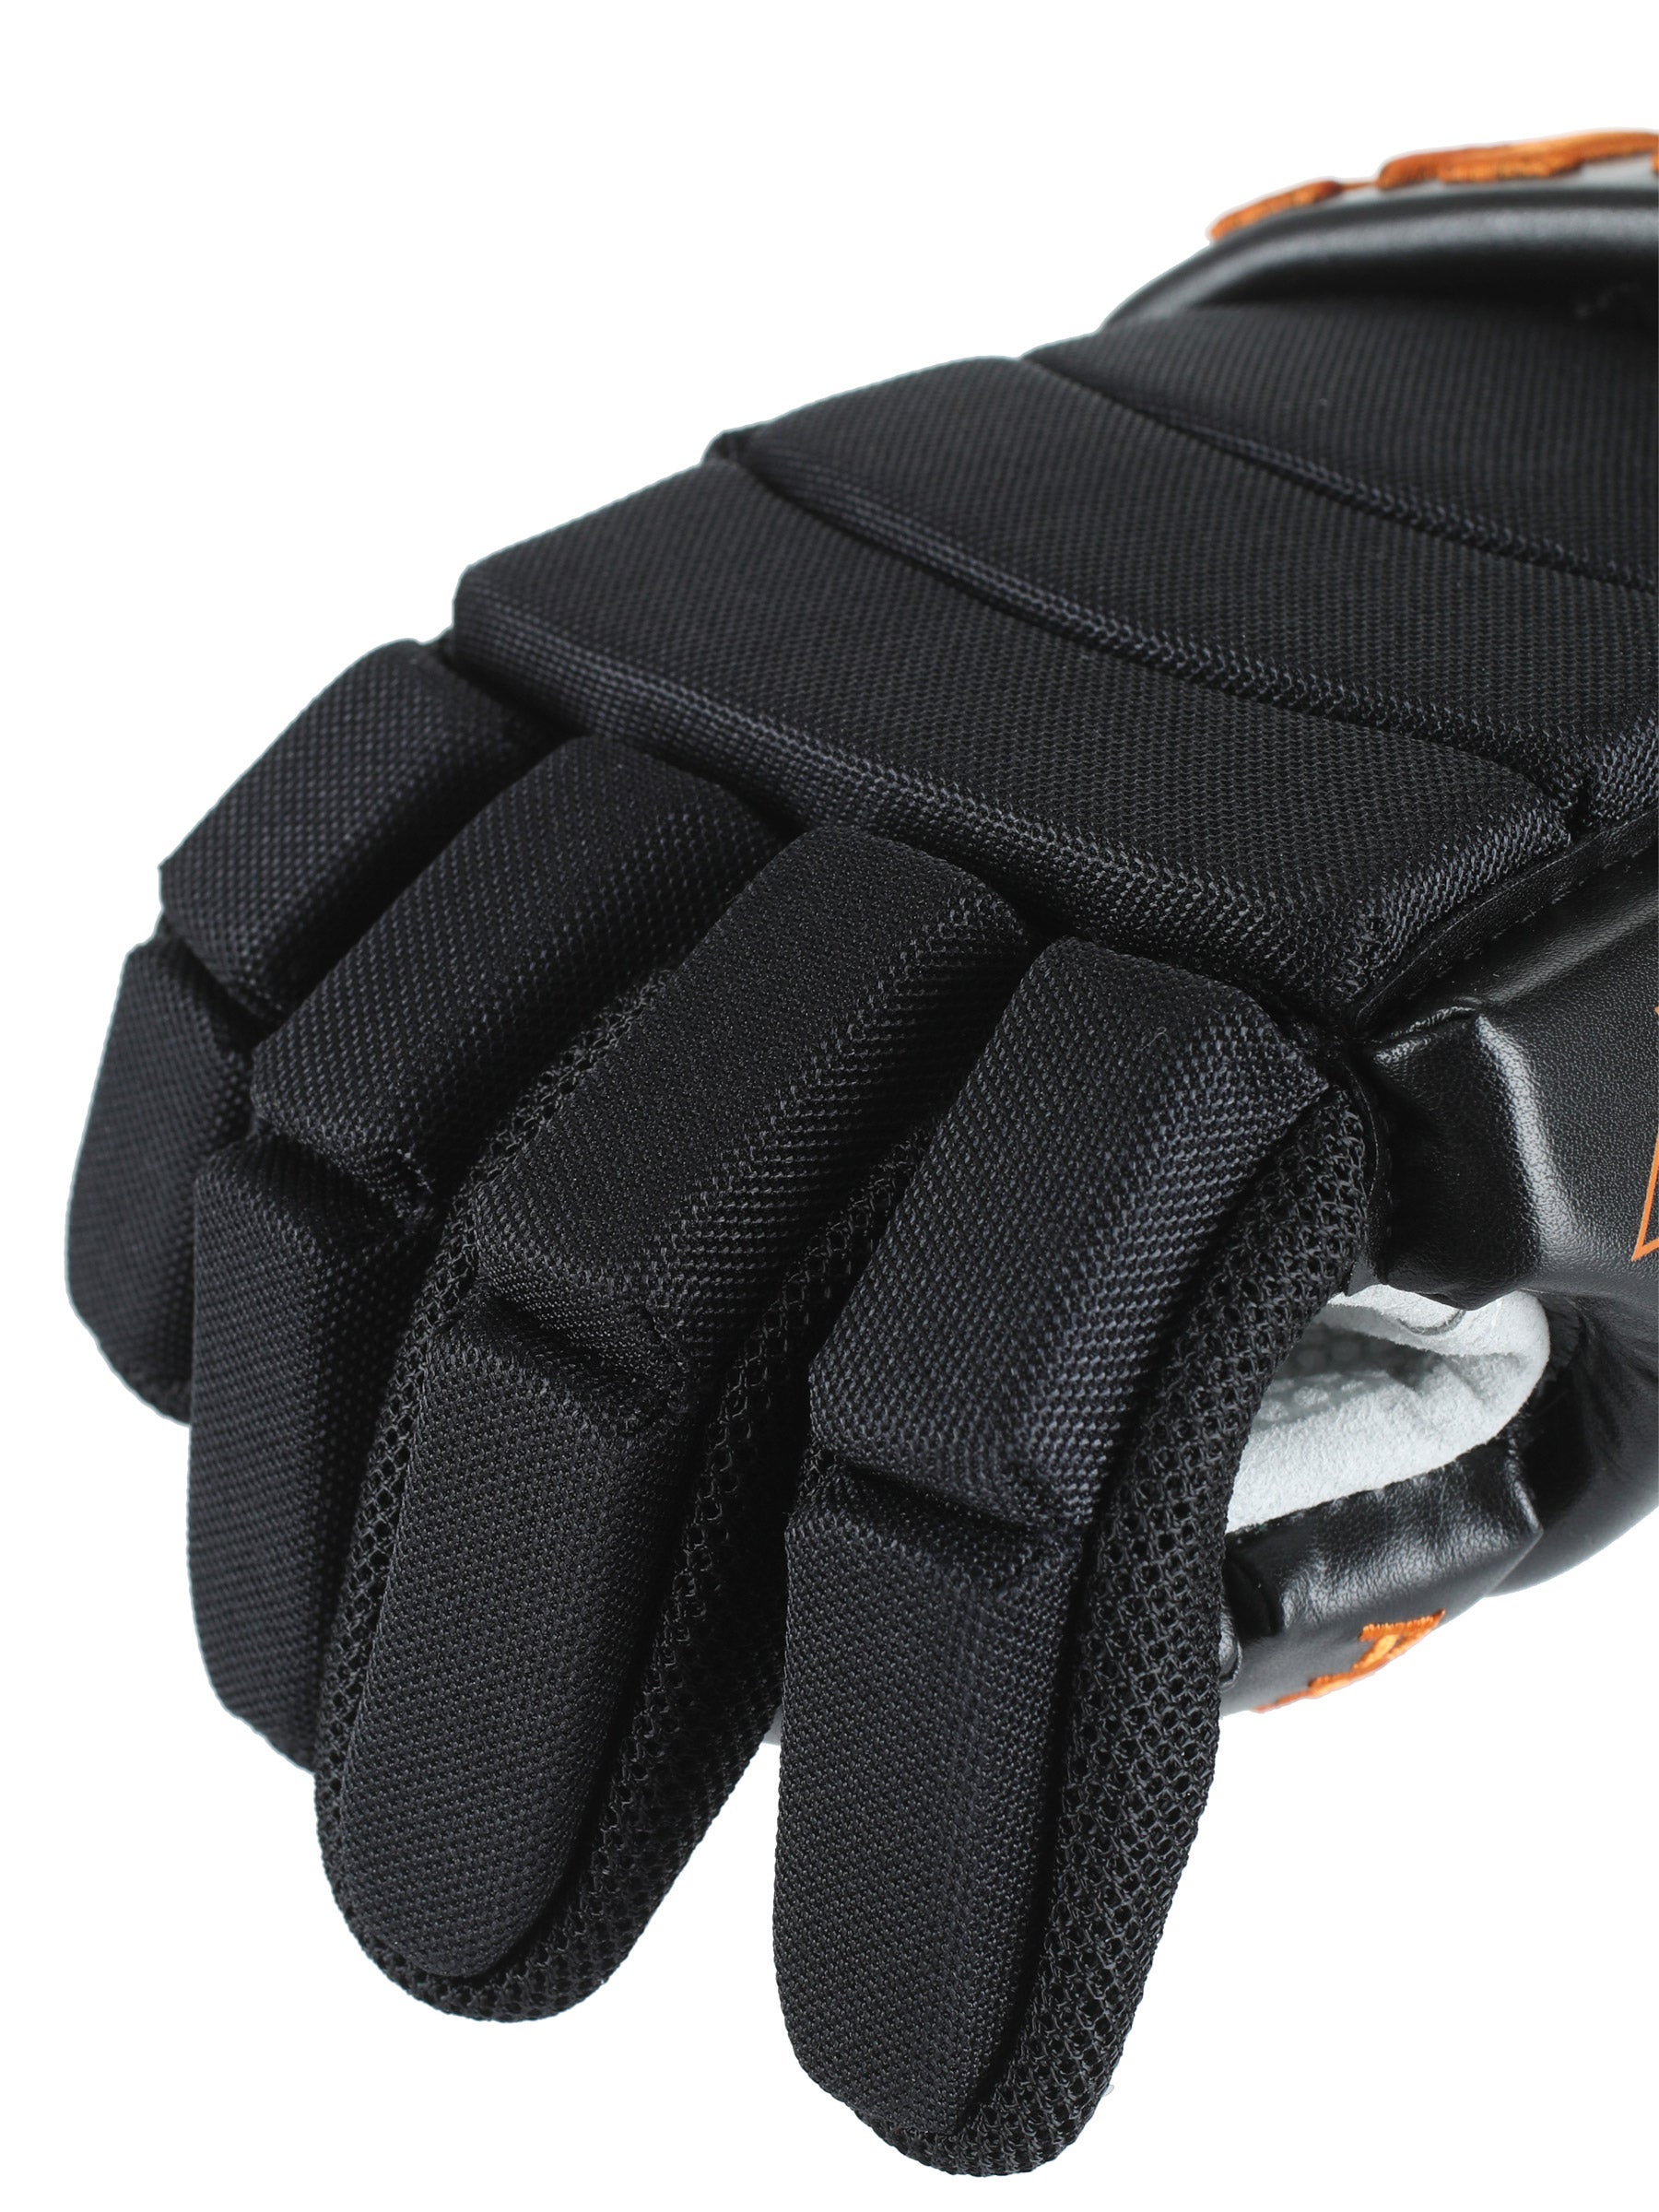 Mylec Roller Street Hockey Player Gloves Size Large 590a for sale online 